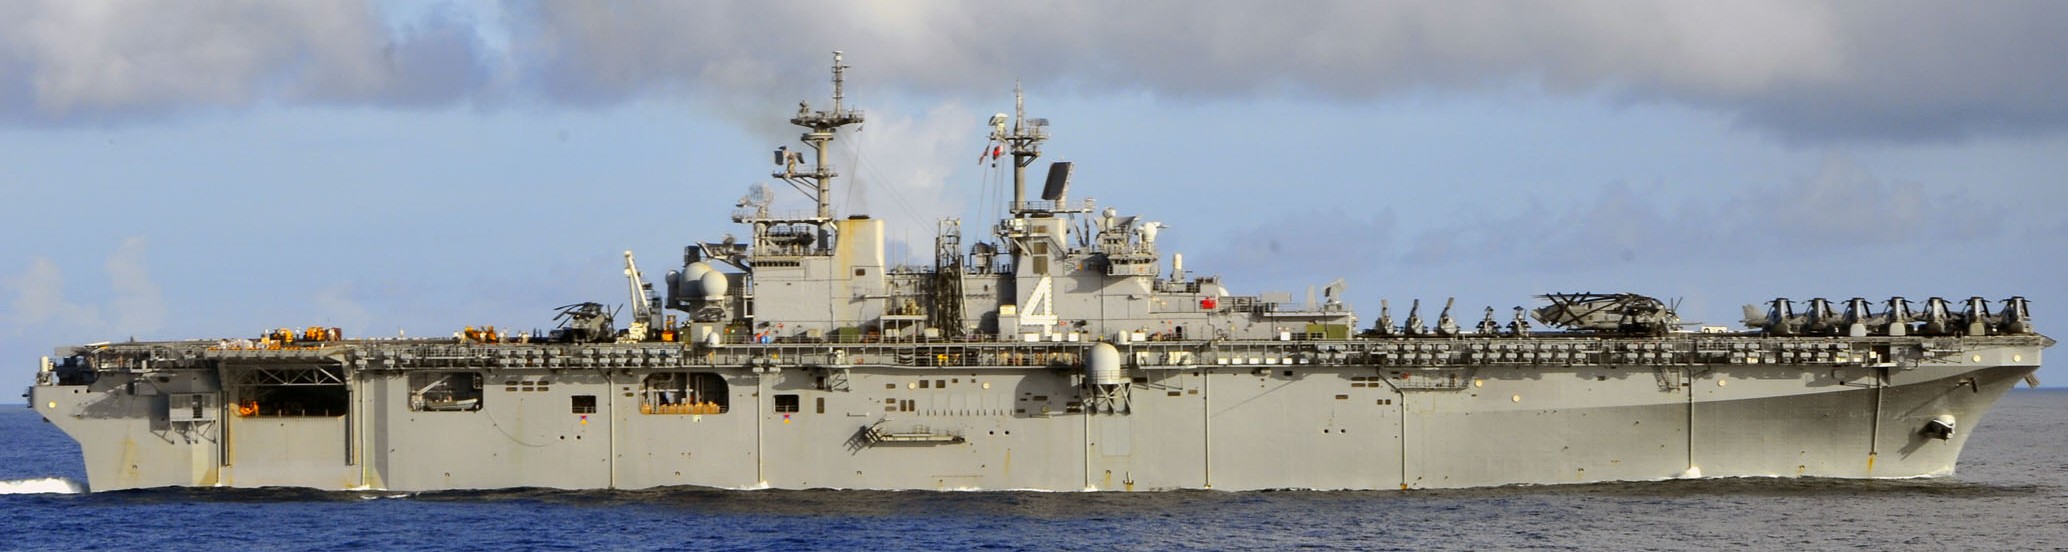 lhd-4 uss boxer wasp class amphibious assault ship dock landing us navy marines hmm-163 south china sea 54